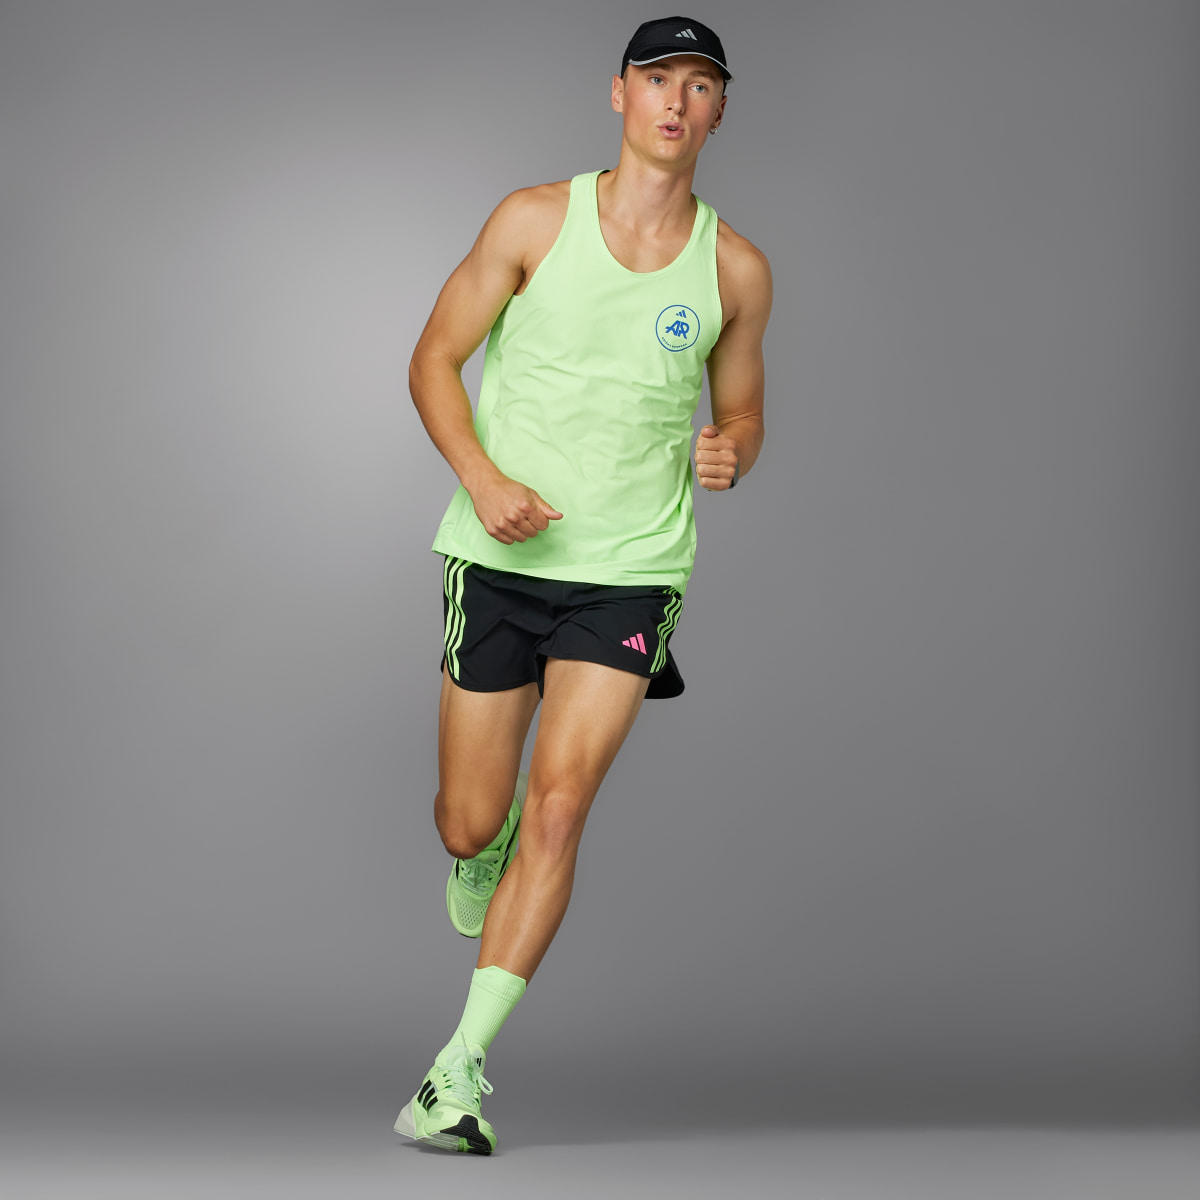 Adidas Own the Run adidas Runners Tank Top. 4